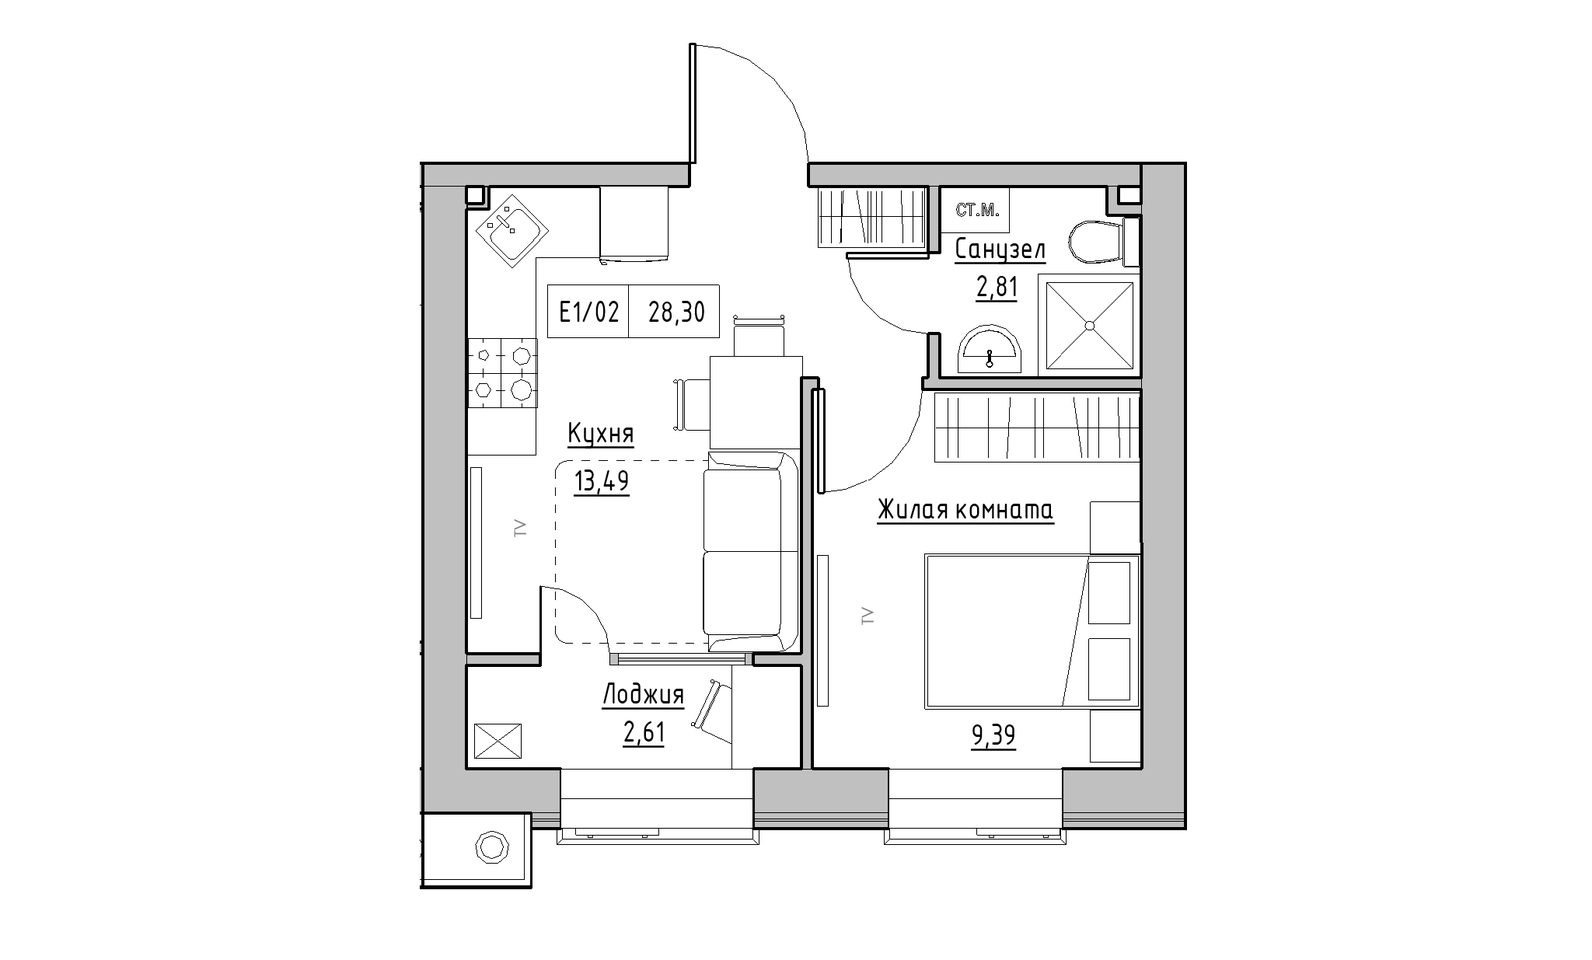 Planning 1-rm flats area 28.3m2, KS-014-05/0001.